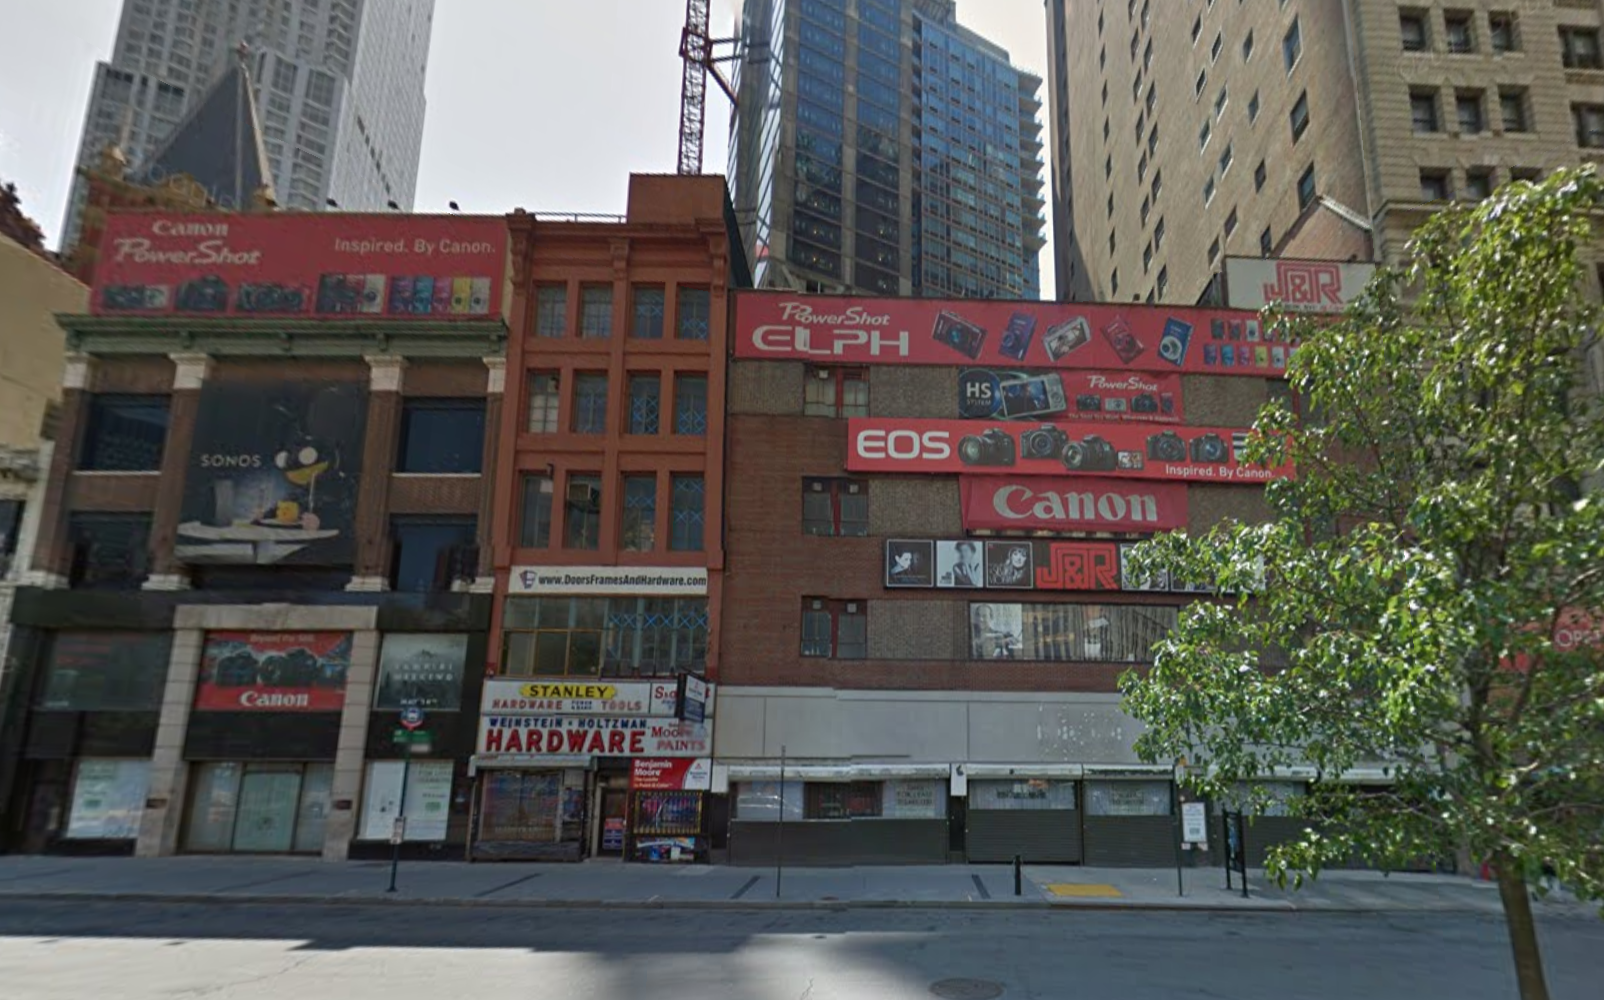 23-32 Park Row in 2015, before demolition. image via Google Maps